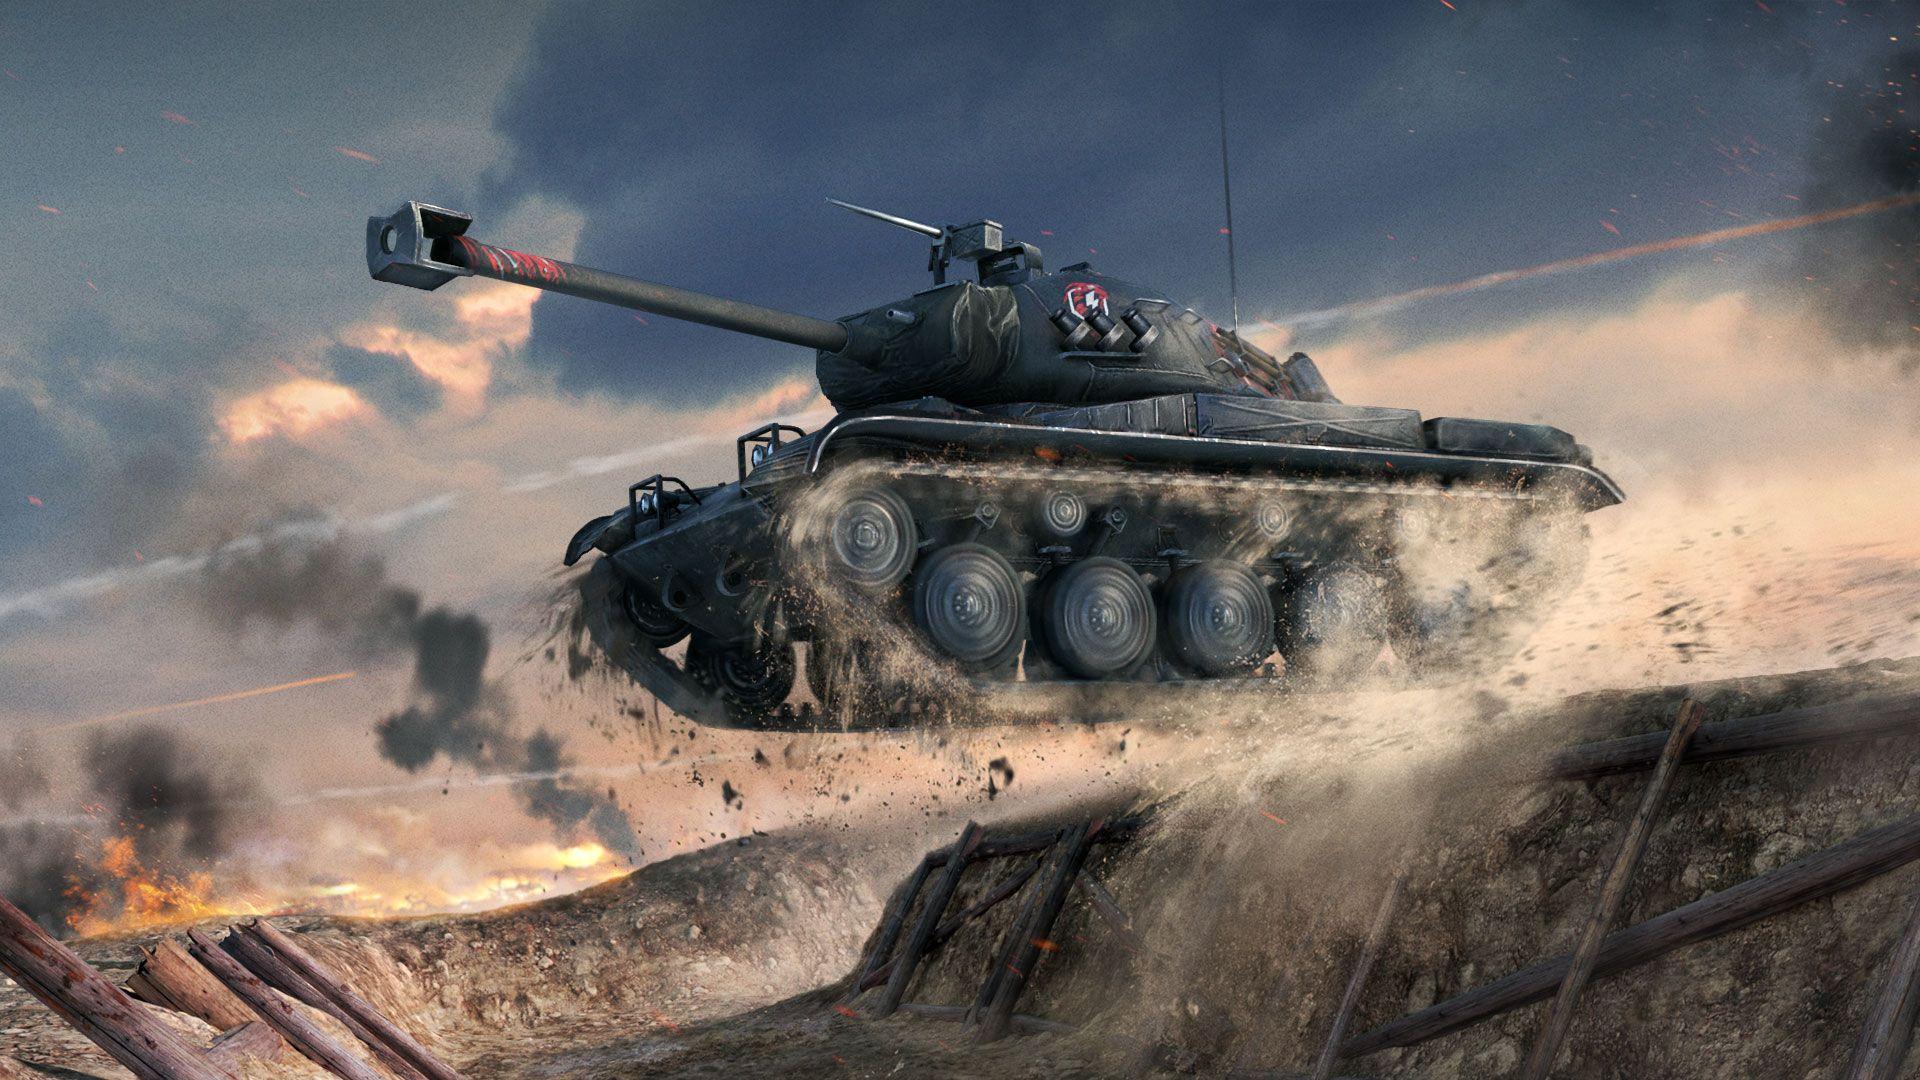 World of Tanks Blitz Wallpapers - Top Free World of Tanks Blitz ...